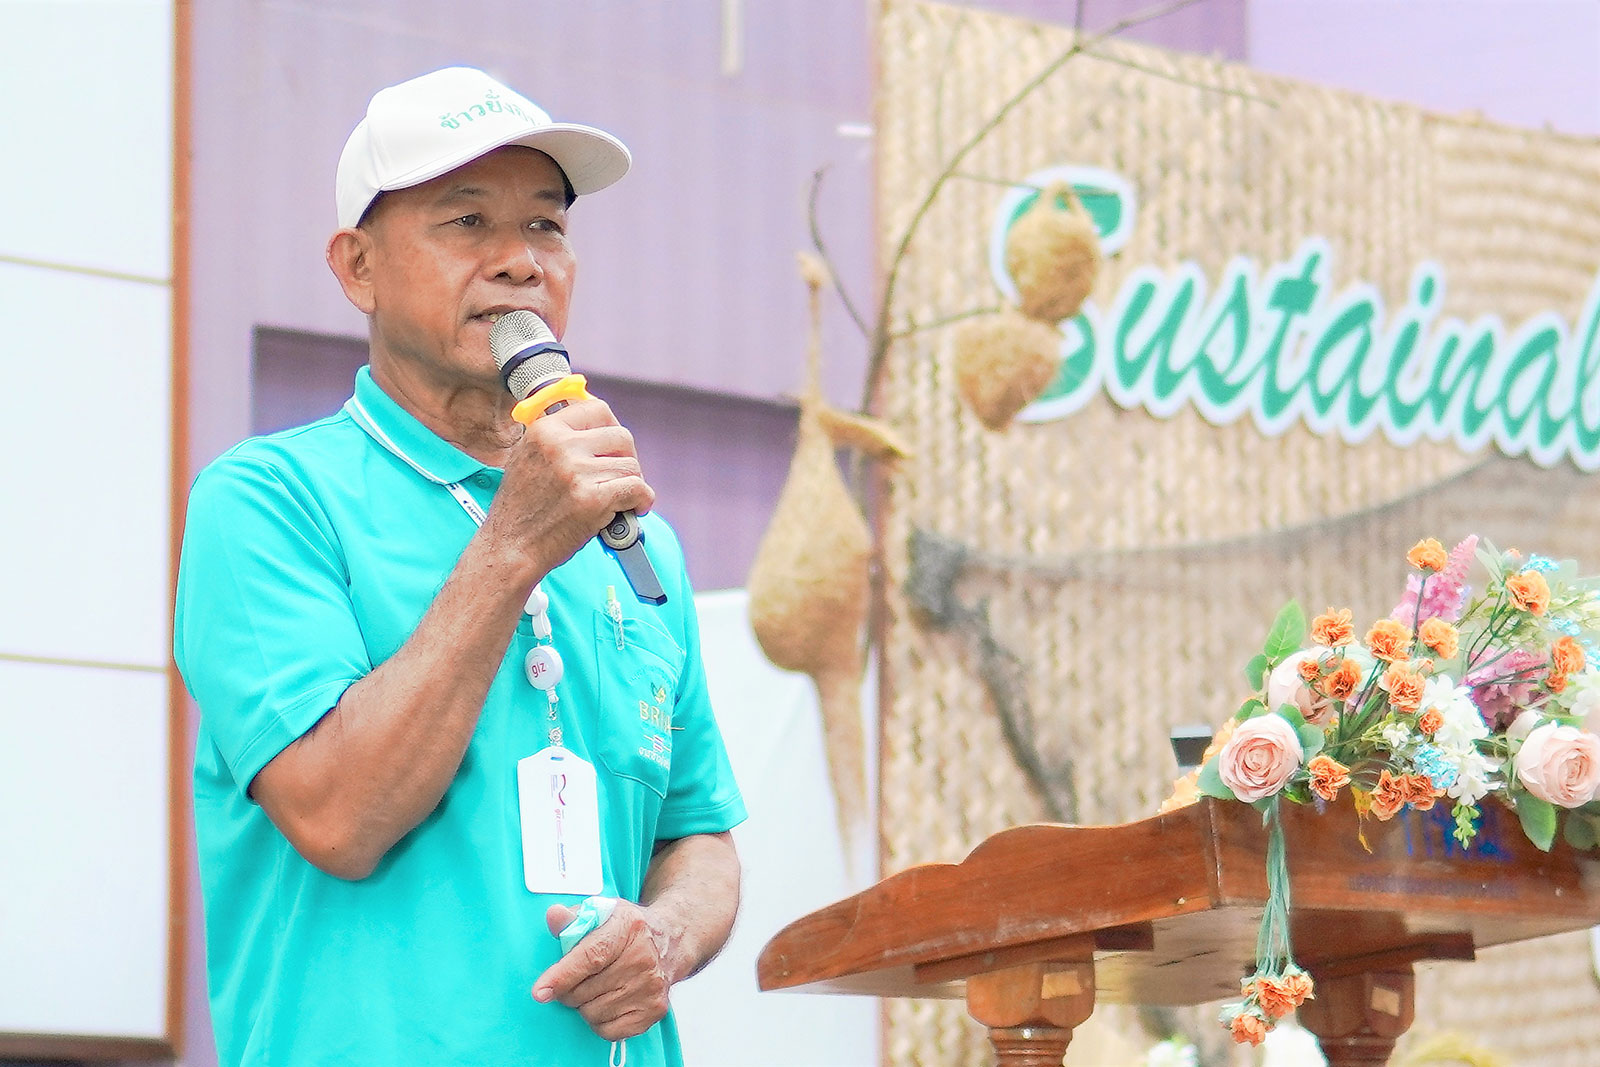 Wanna Sriwilai, MSVC Thailand member from Warinchamrap District, Ubon Ratchathani (นายวรรณะ ศรีวิไล เกษตรกจากกลุ่มข้าวยั่งยืนตำบลโพธิ์ใหญ่ อำเภอวารินชำราบ จังหวัดอุบลราชธานี)